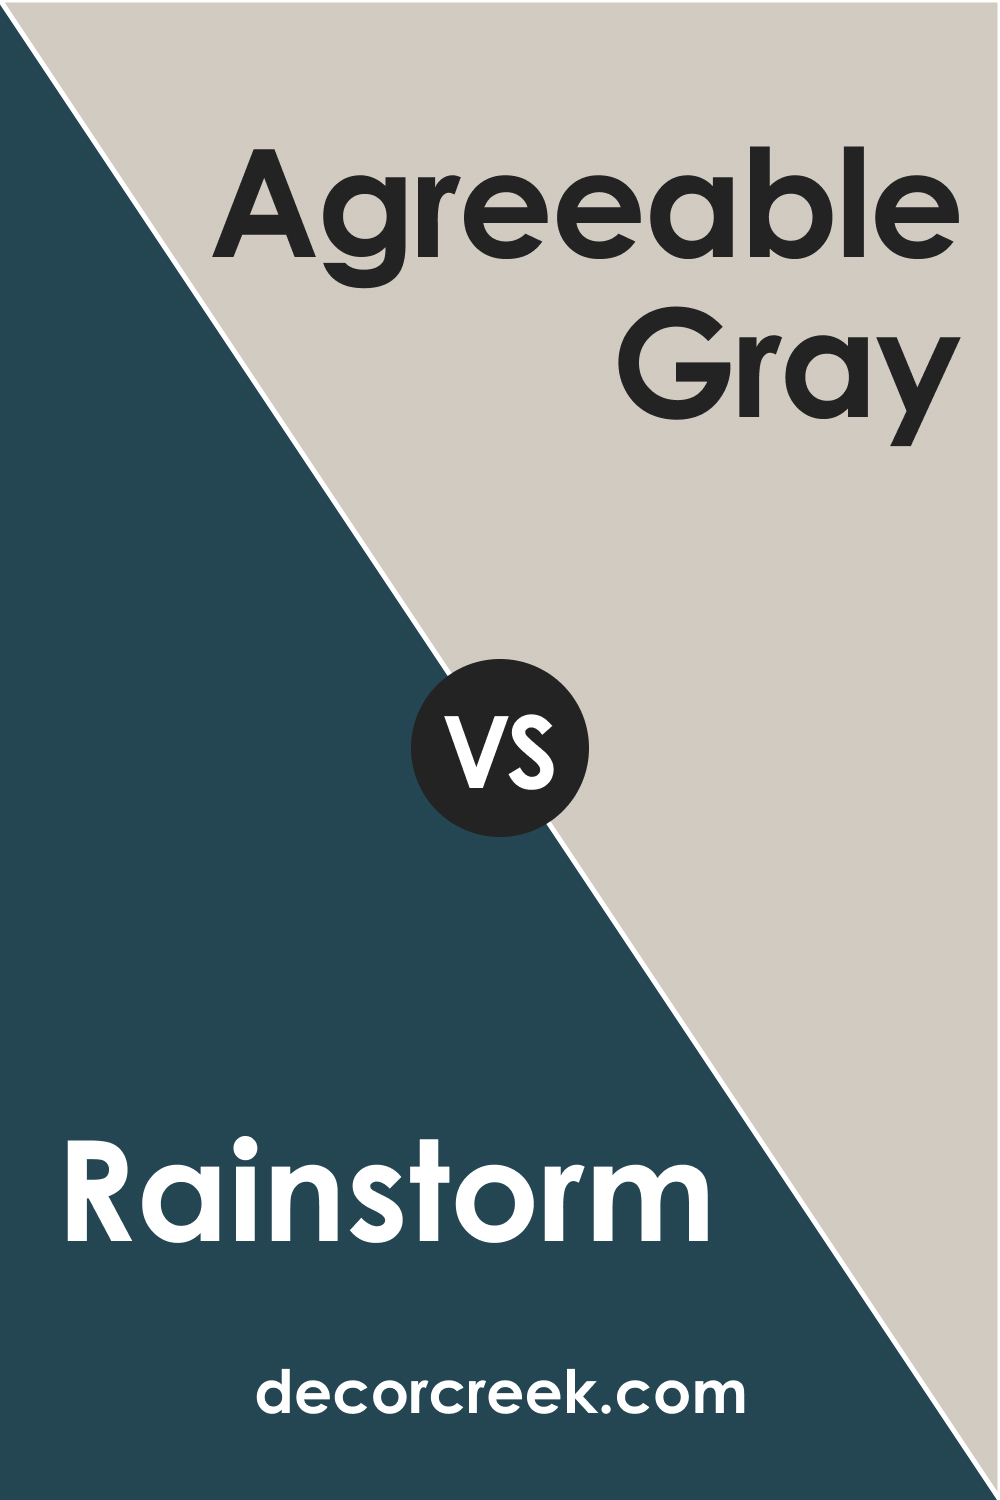 SW 6230 Rainstorm vs. SW 7029 Agreeable Gray